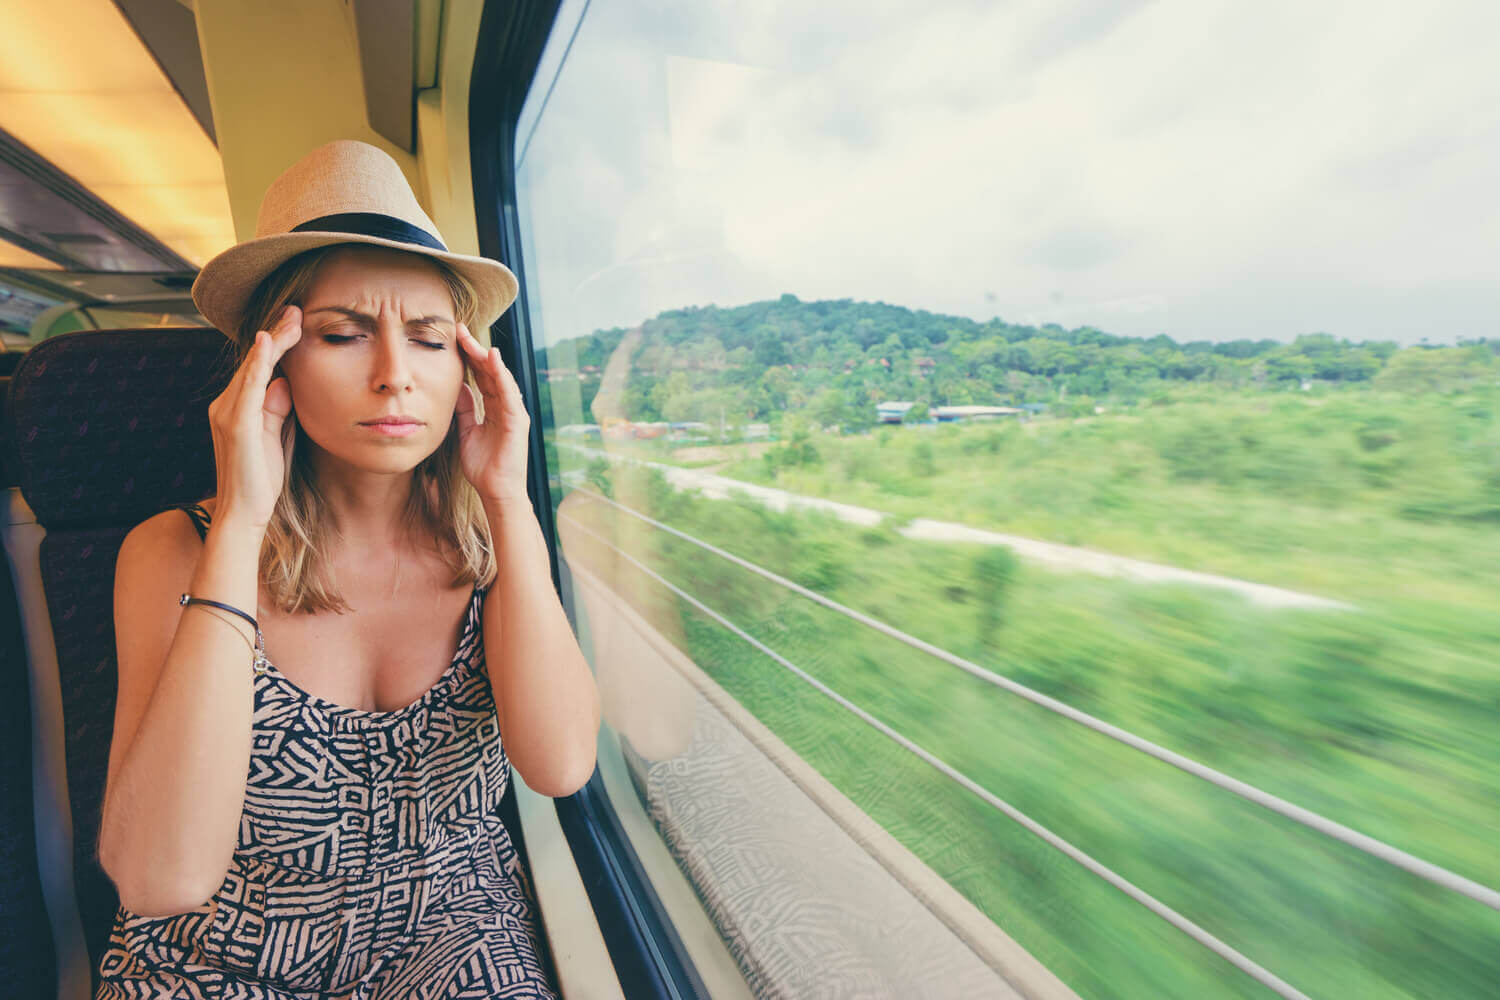 Headache in train symptom of motion sickness